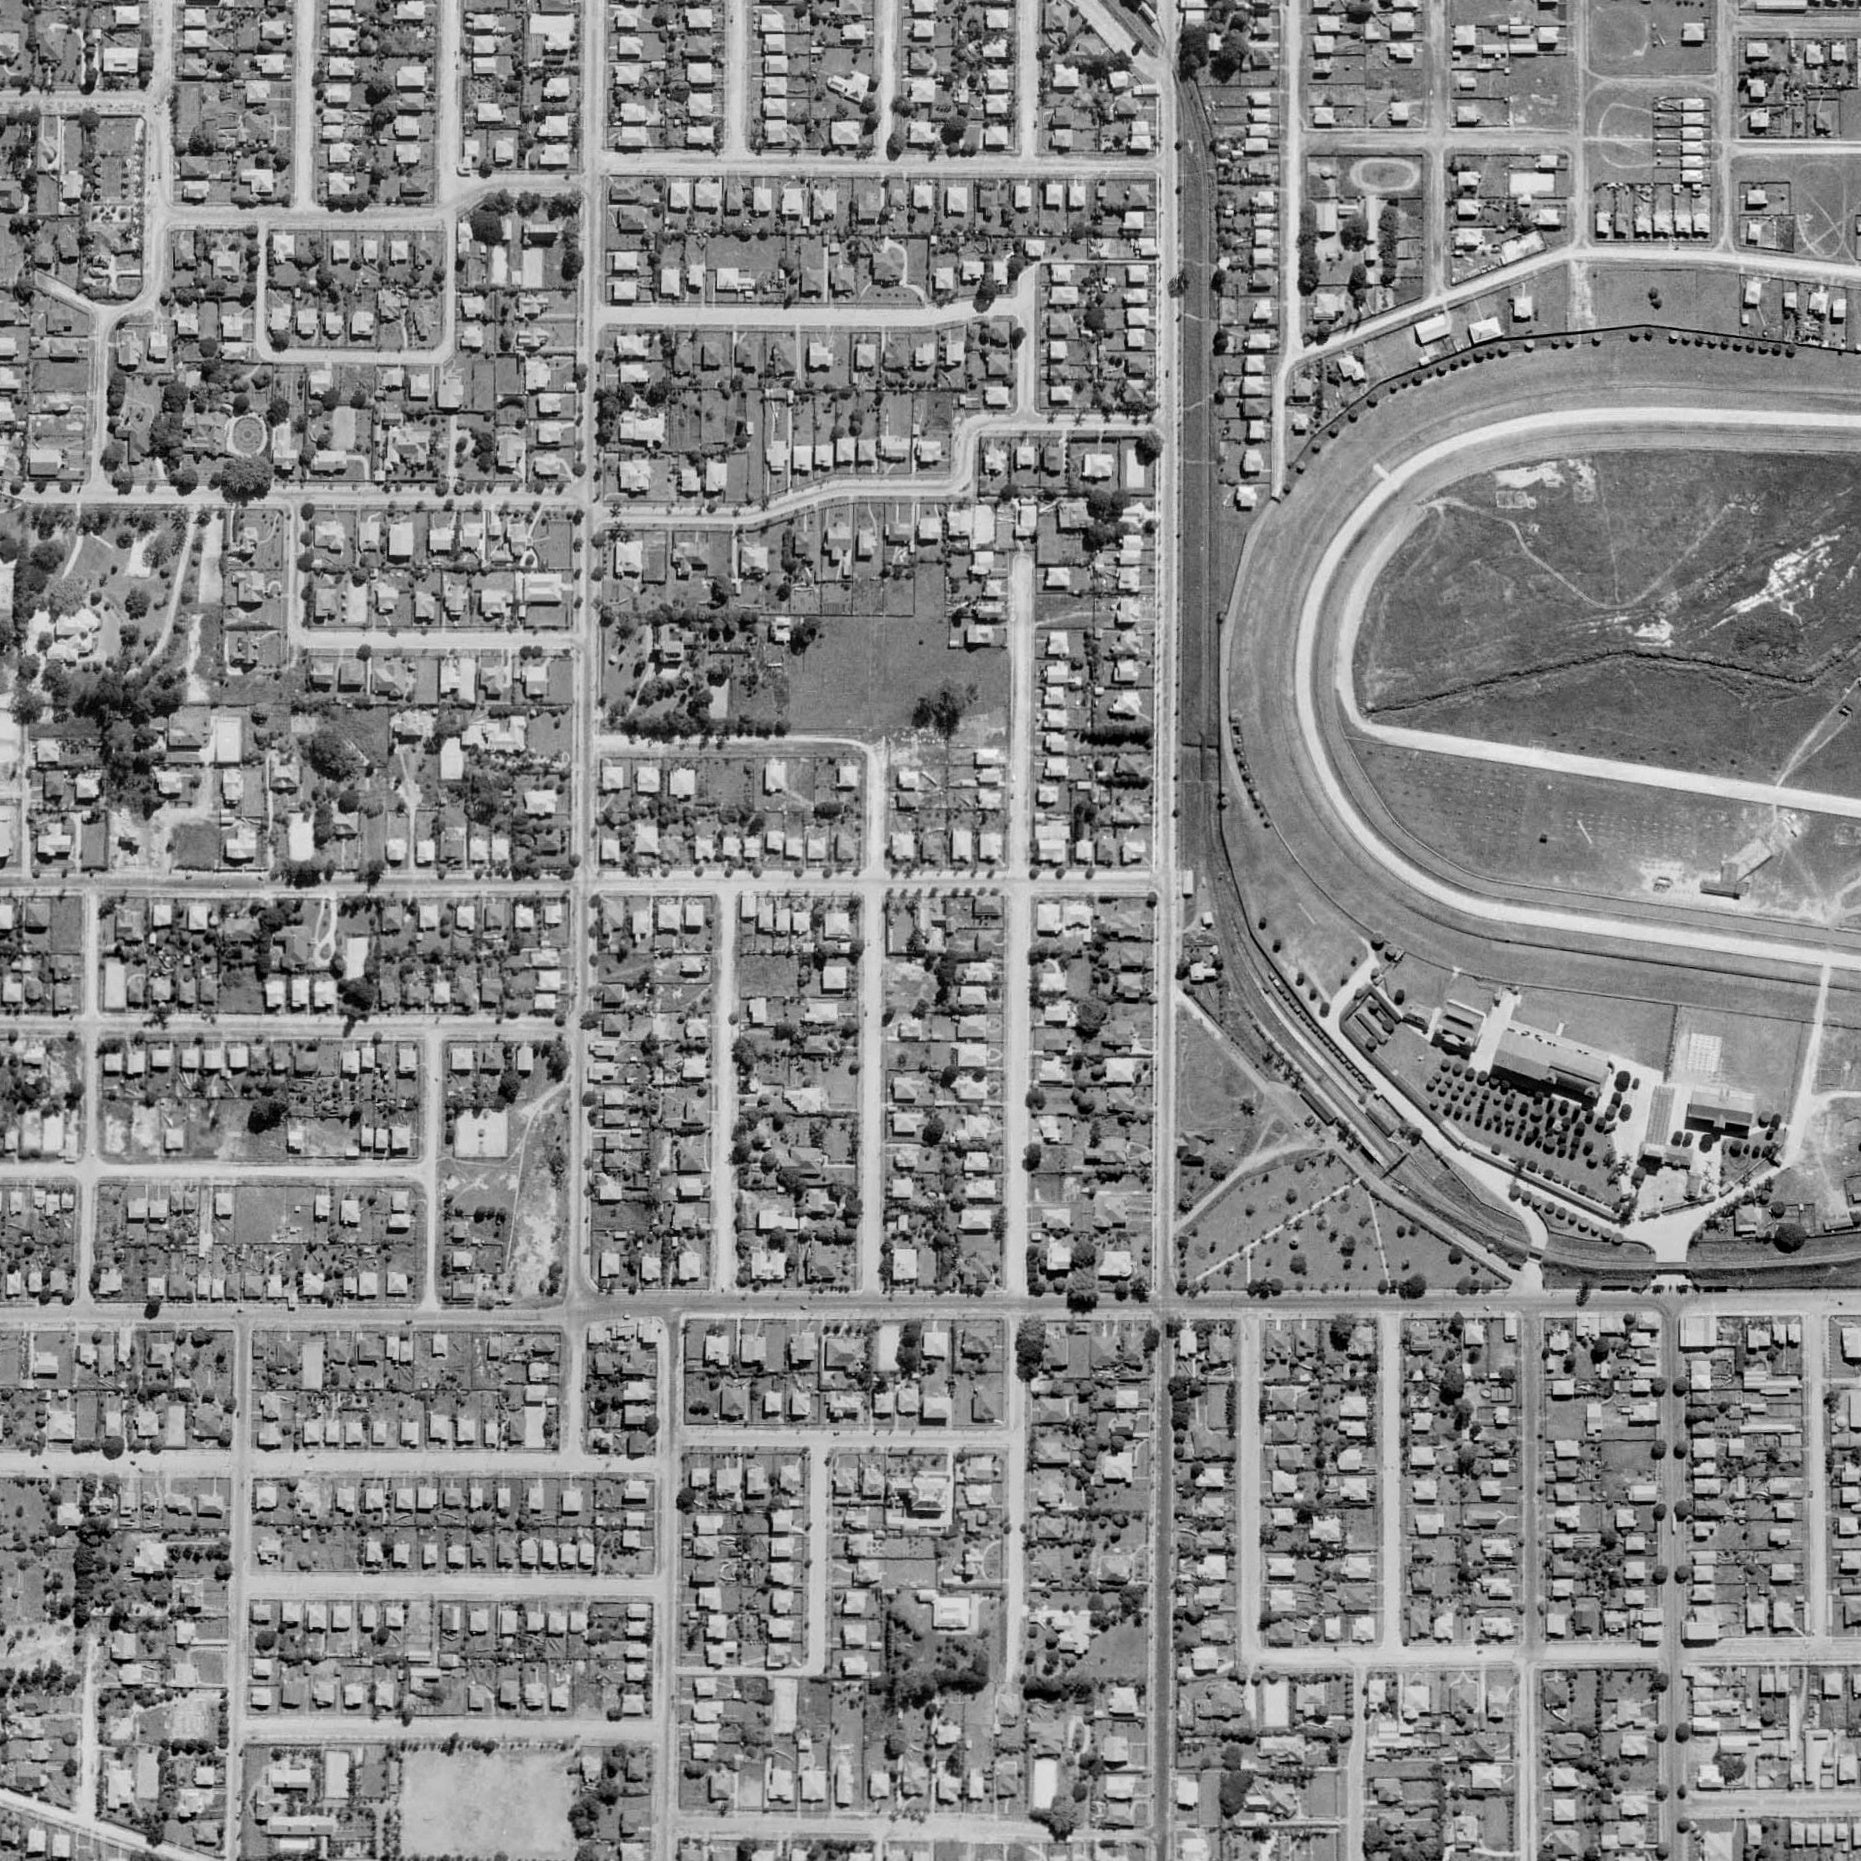 1936 Ascot - Aerial Photo - Eagle Farm Racecourse